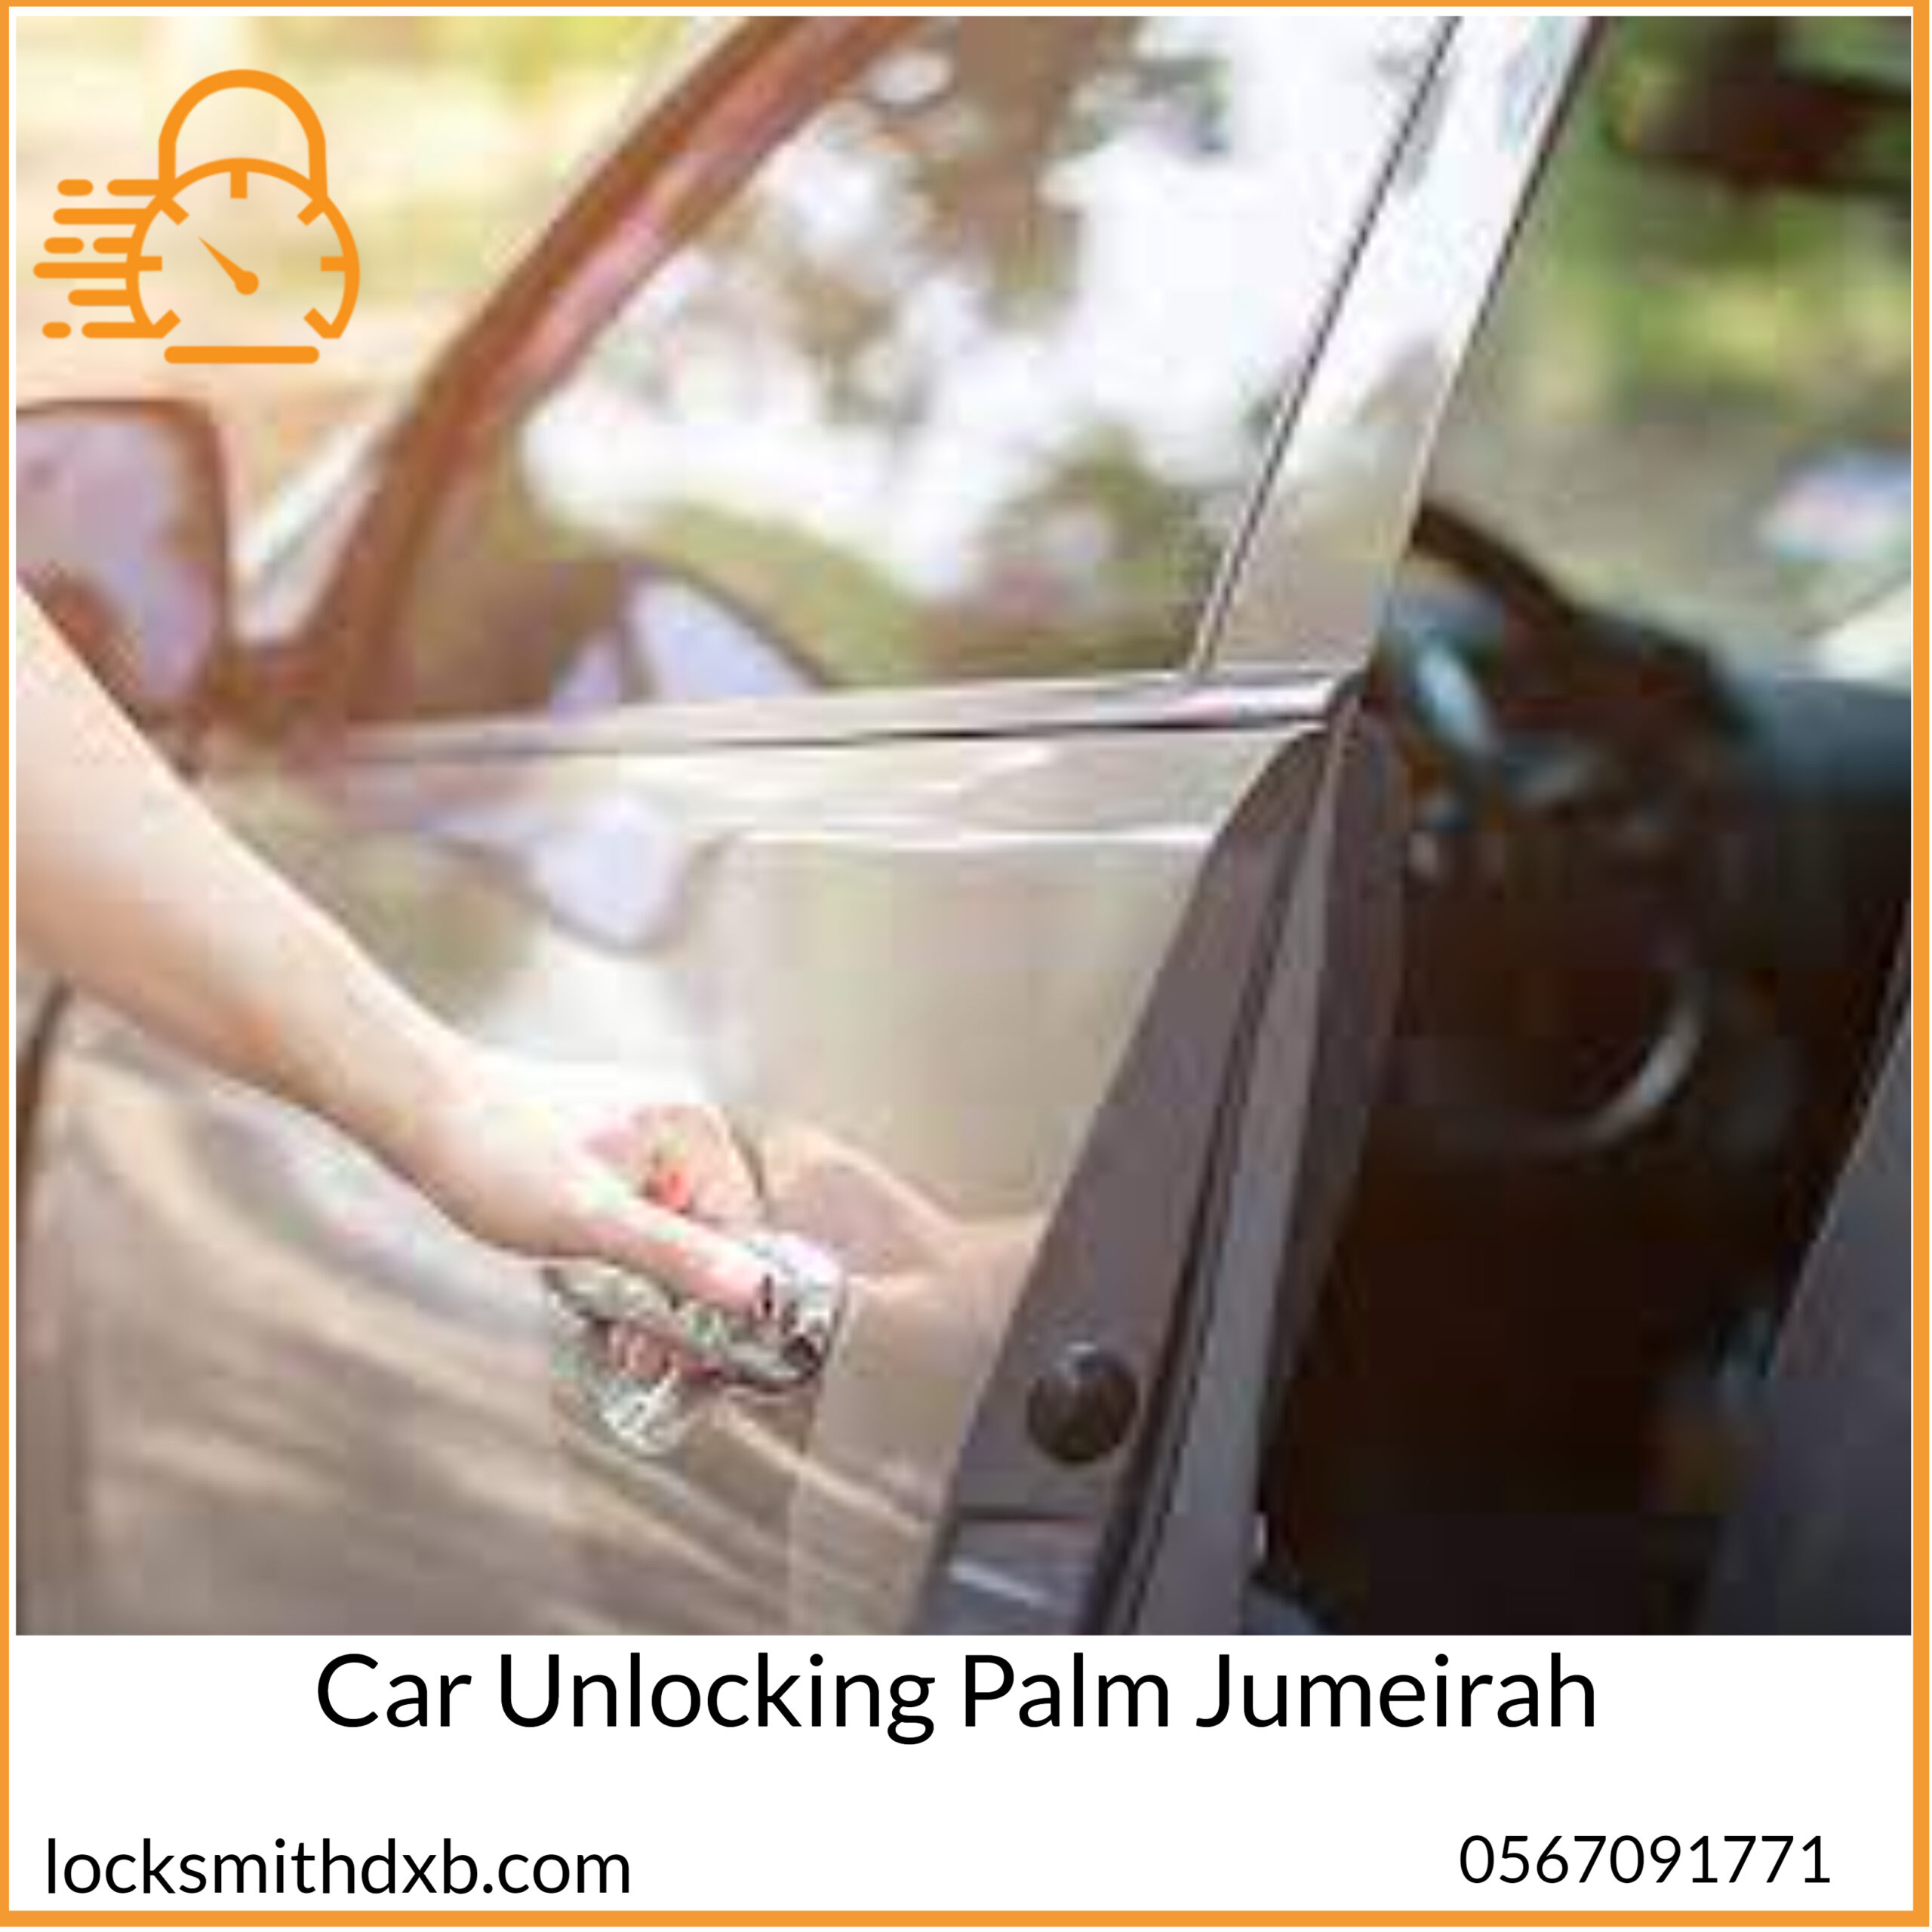 Car Unlocking Palm Jumeirah